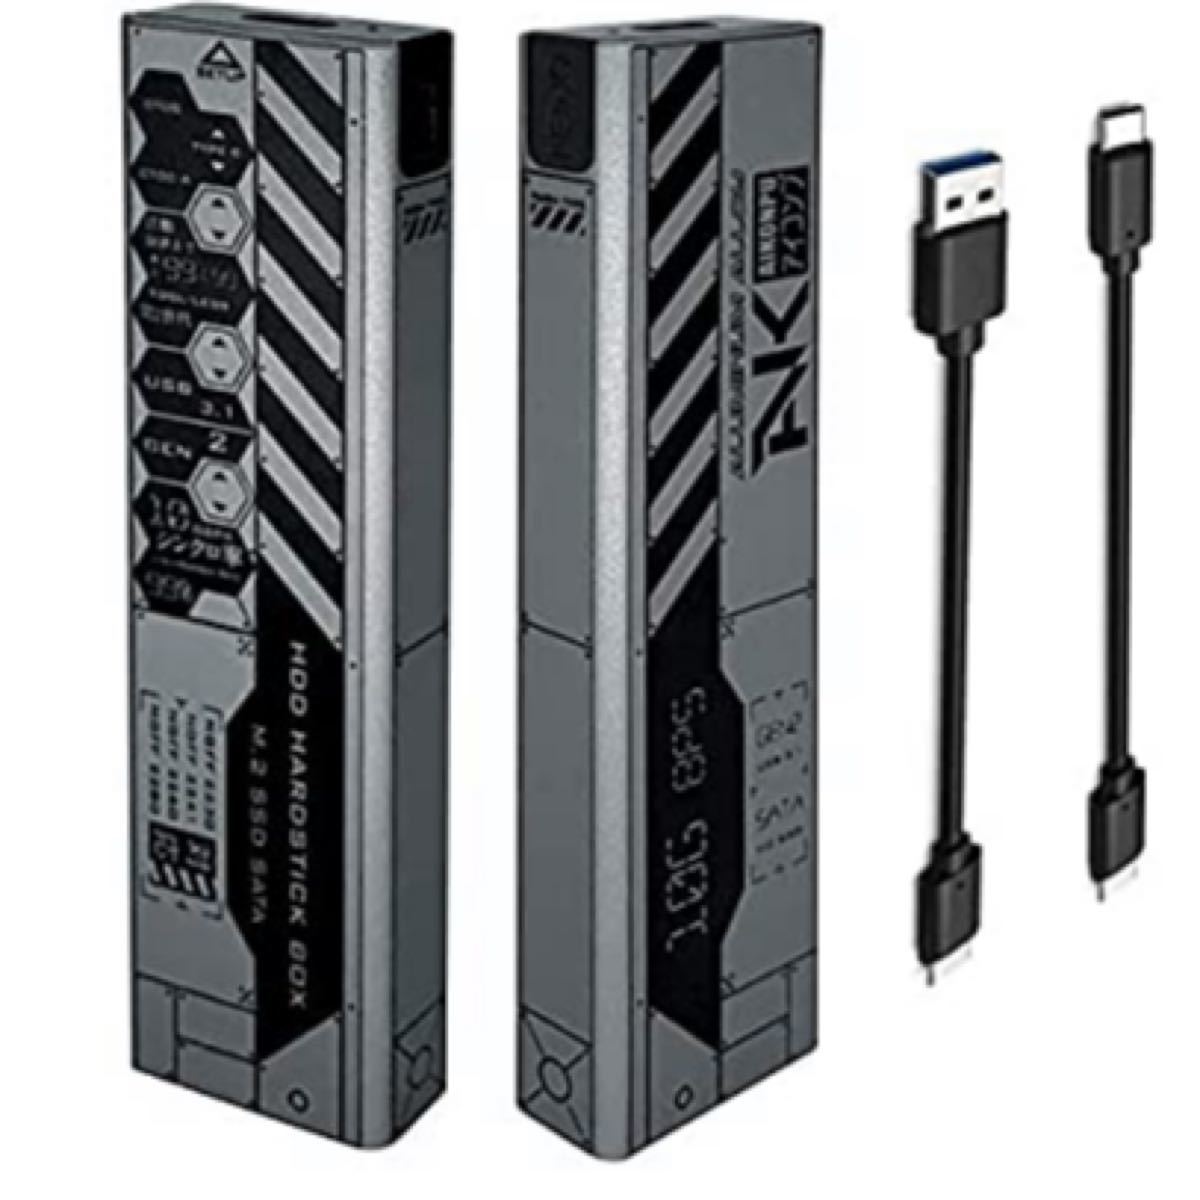 M.2 SSD ケース Type-C to NGFF USB3.1 Gen2 